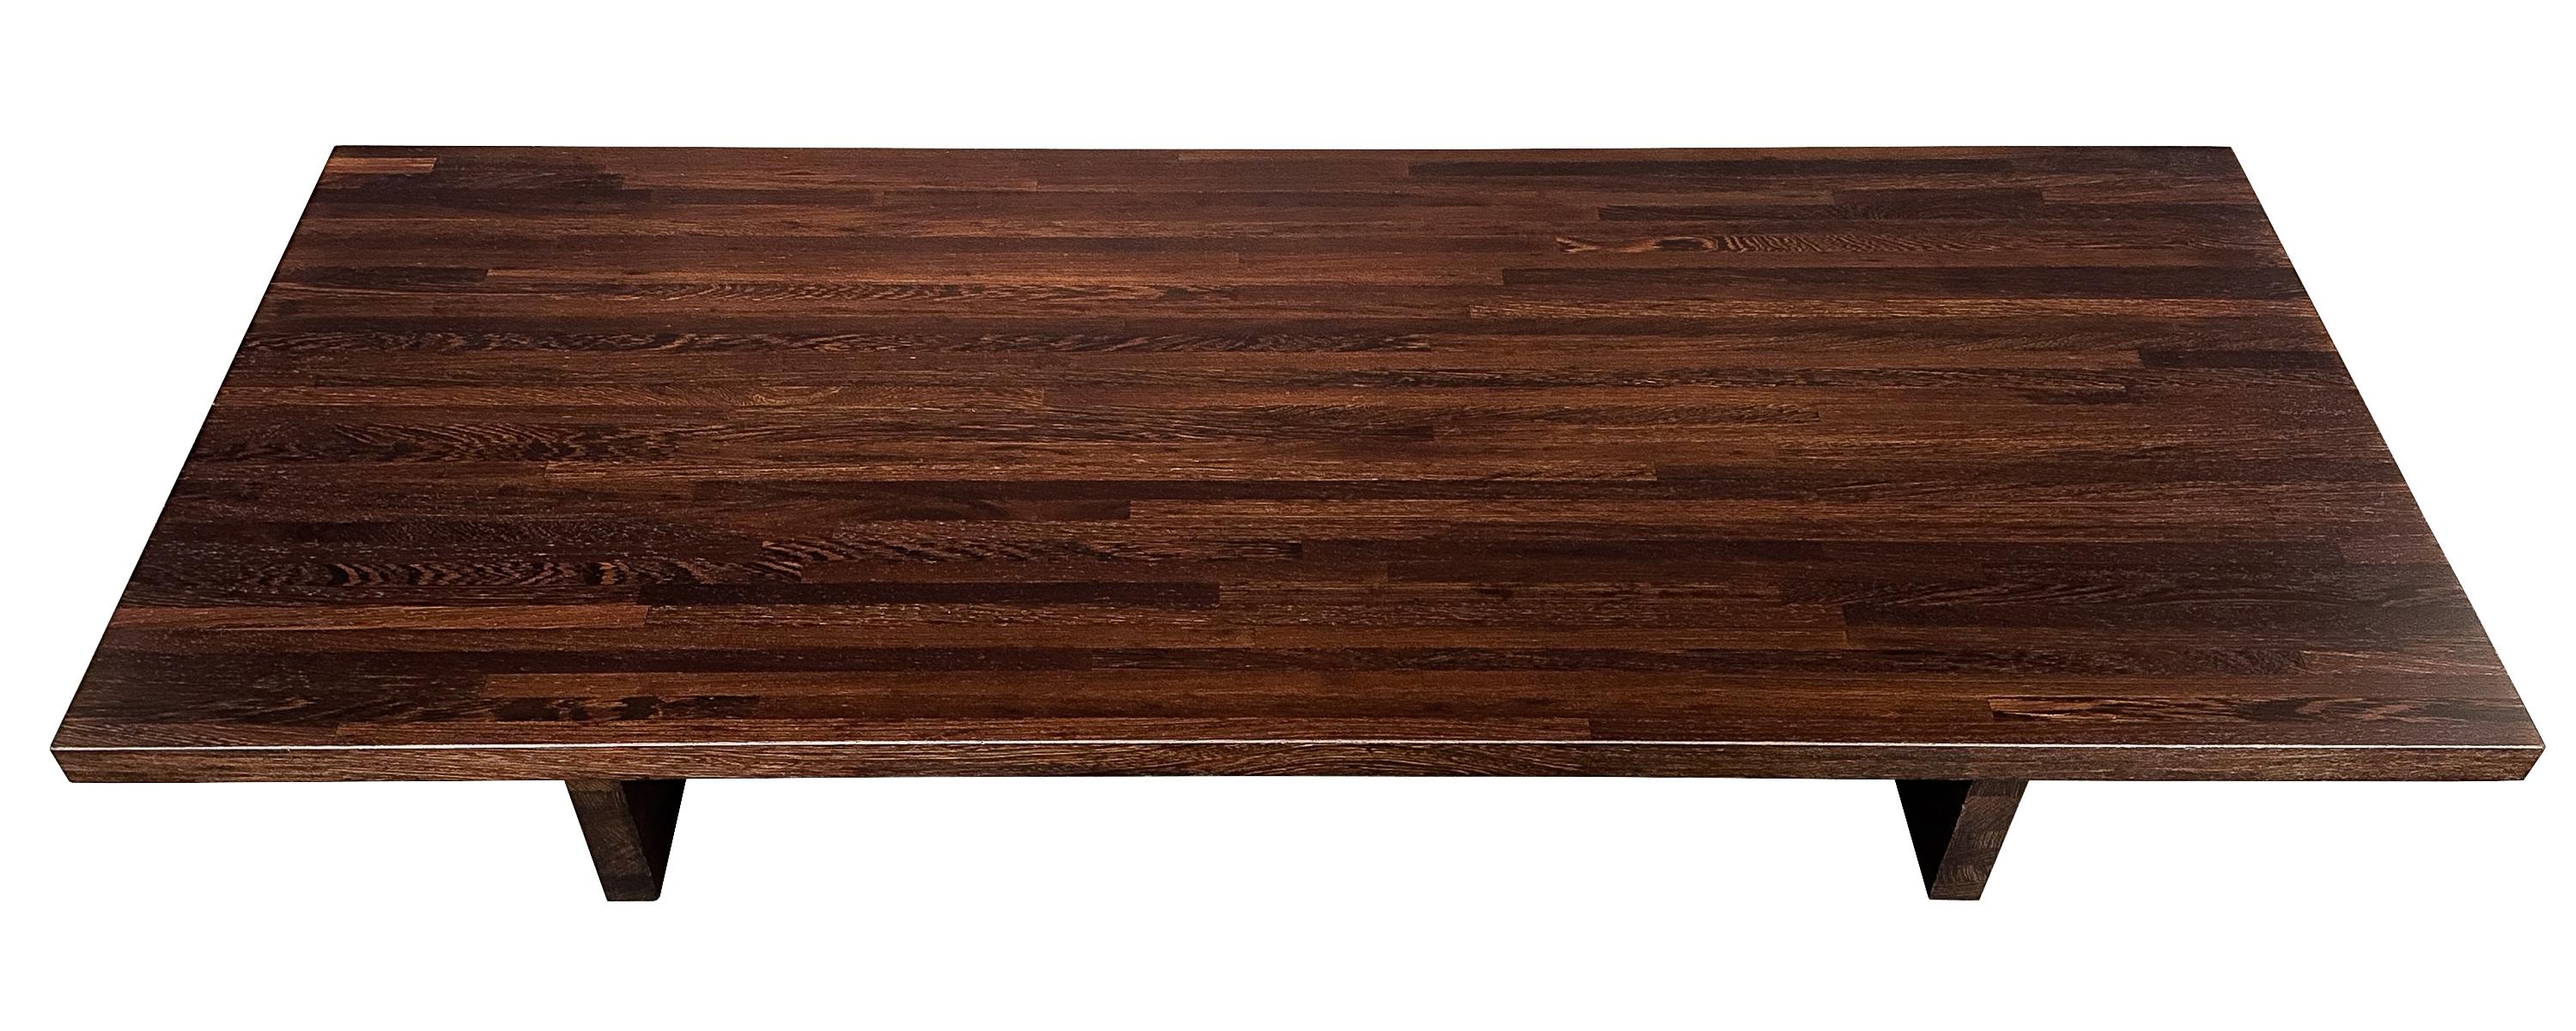 low wood coffee table